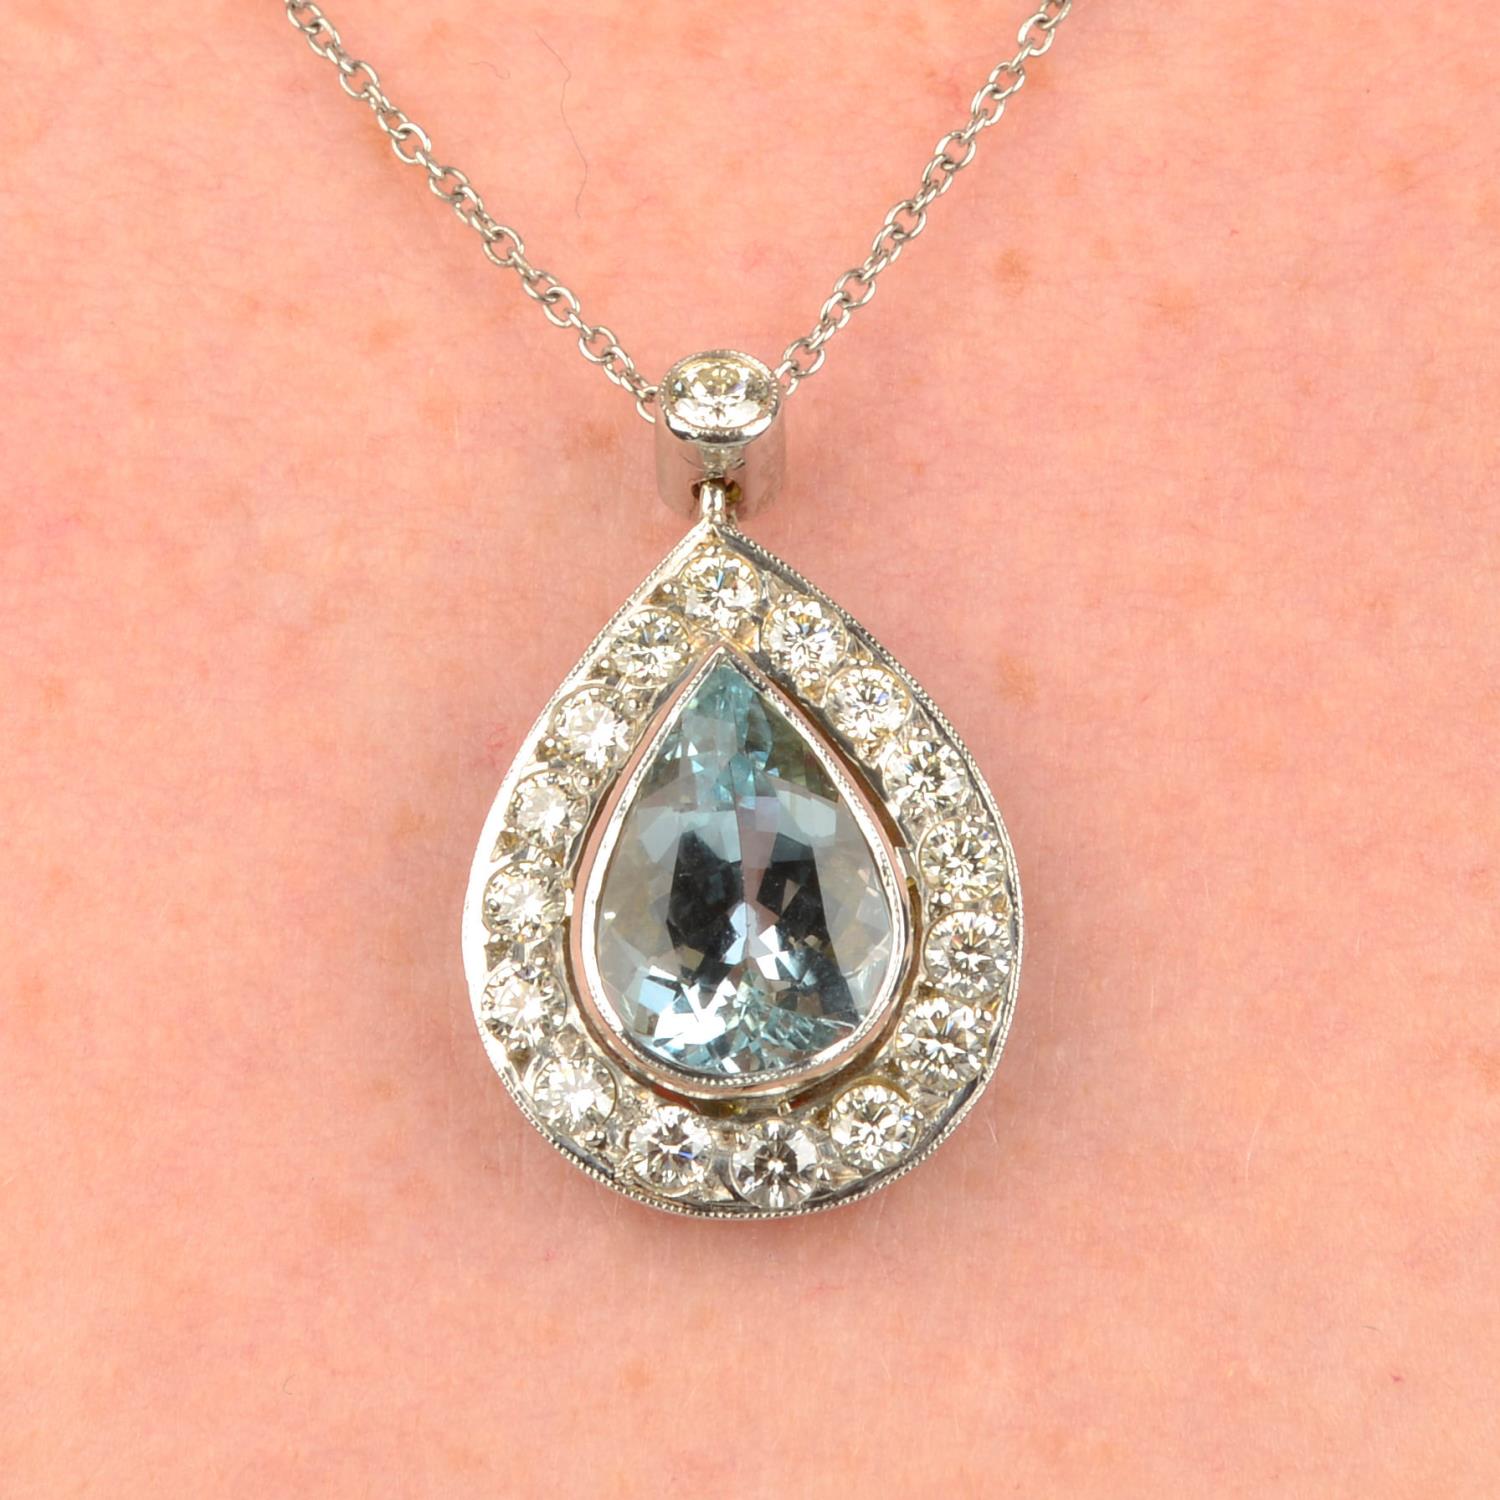 An aquamarine and diamond cluster pendant, on chain.